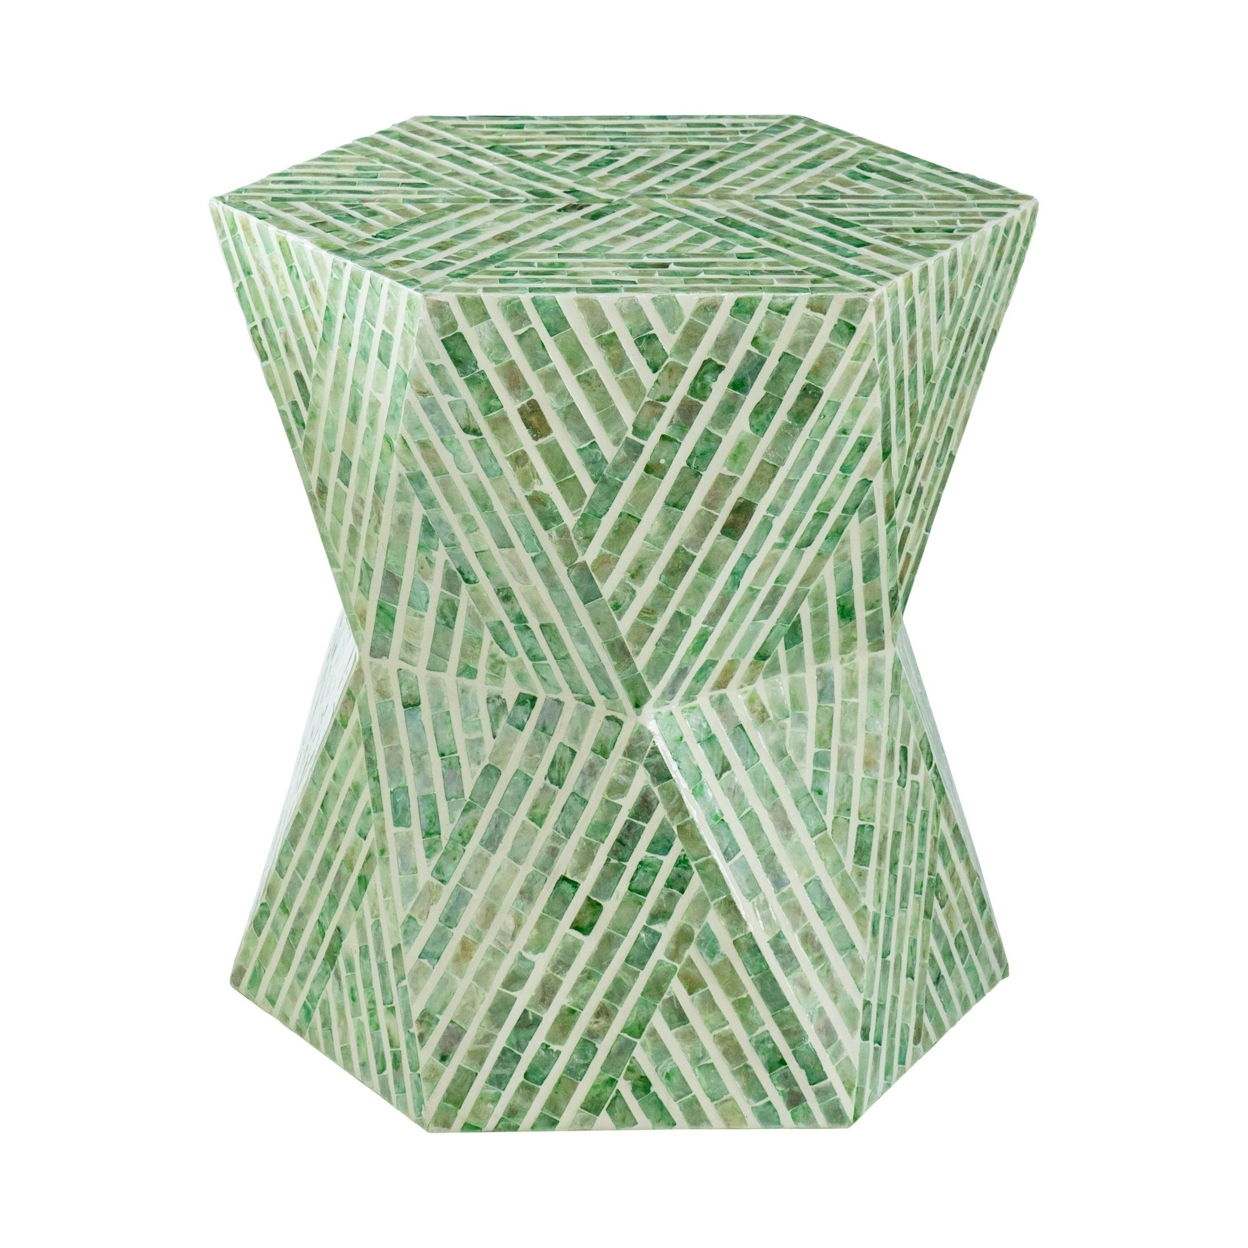 20 Inch Stool Table, Capiz Shell Inlay, Hexagonal Geometric Design, Green, Saltoro Sherpi